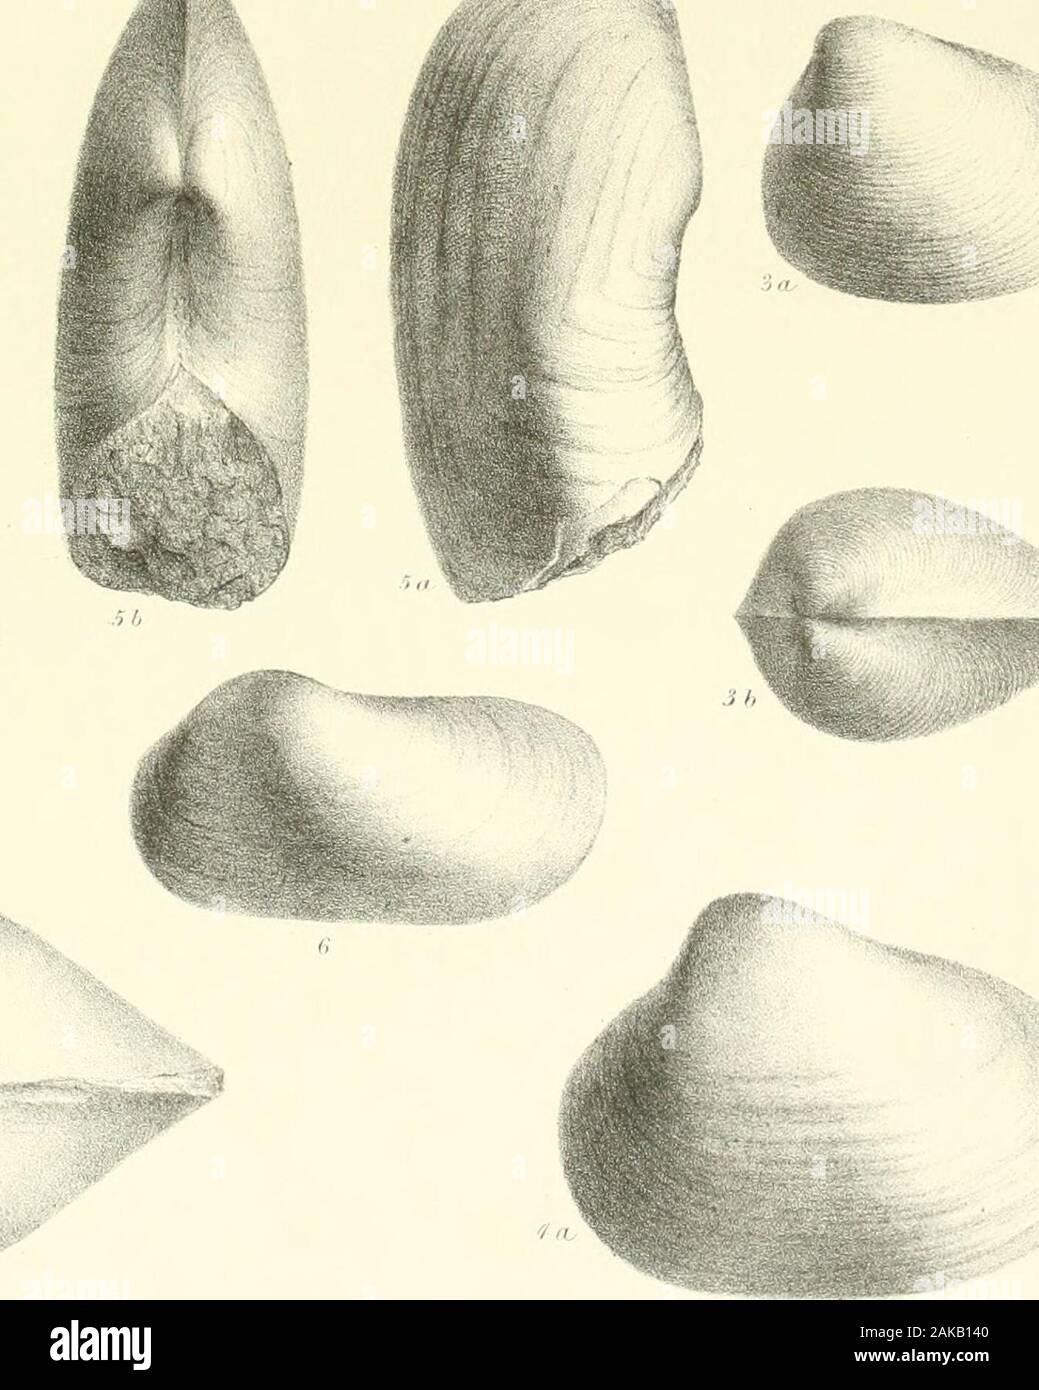 Une monographie des mollusques de la Grande Oolite principalement de Minchinhampton et la côte du Yorkshire . Onglet. XI. Fig. 1. Pholadomya solitaria, p. 123. 2. Myacites calceiformis, p. 113. 3. Goniomya literata, p. 119. 4. Anatina undulata, p. 188. 5. 5a. Myacites Vezelayi, p. 111. 6. 6a. Anatina plicatella, p. 118. 7. la. Pholadomya socialis, p. 122. VTVvc .tab. XT. Banque D'Images